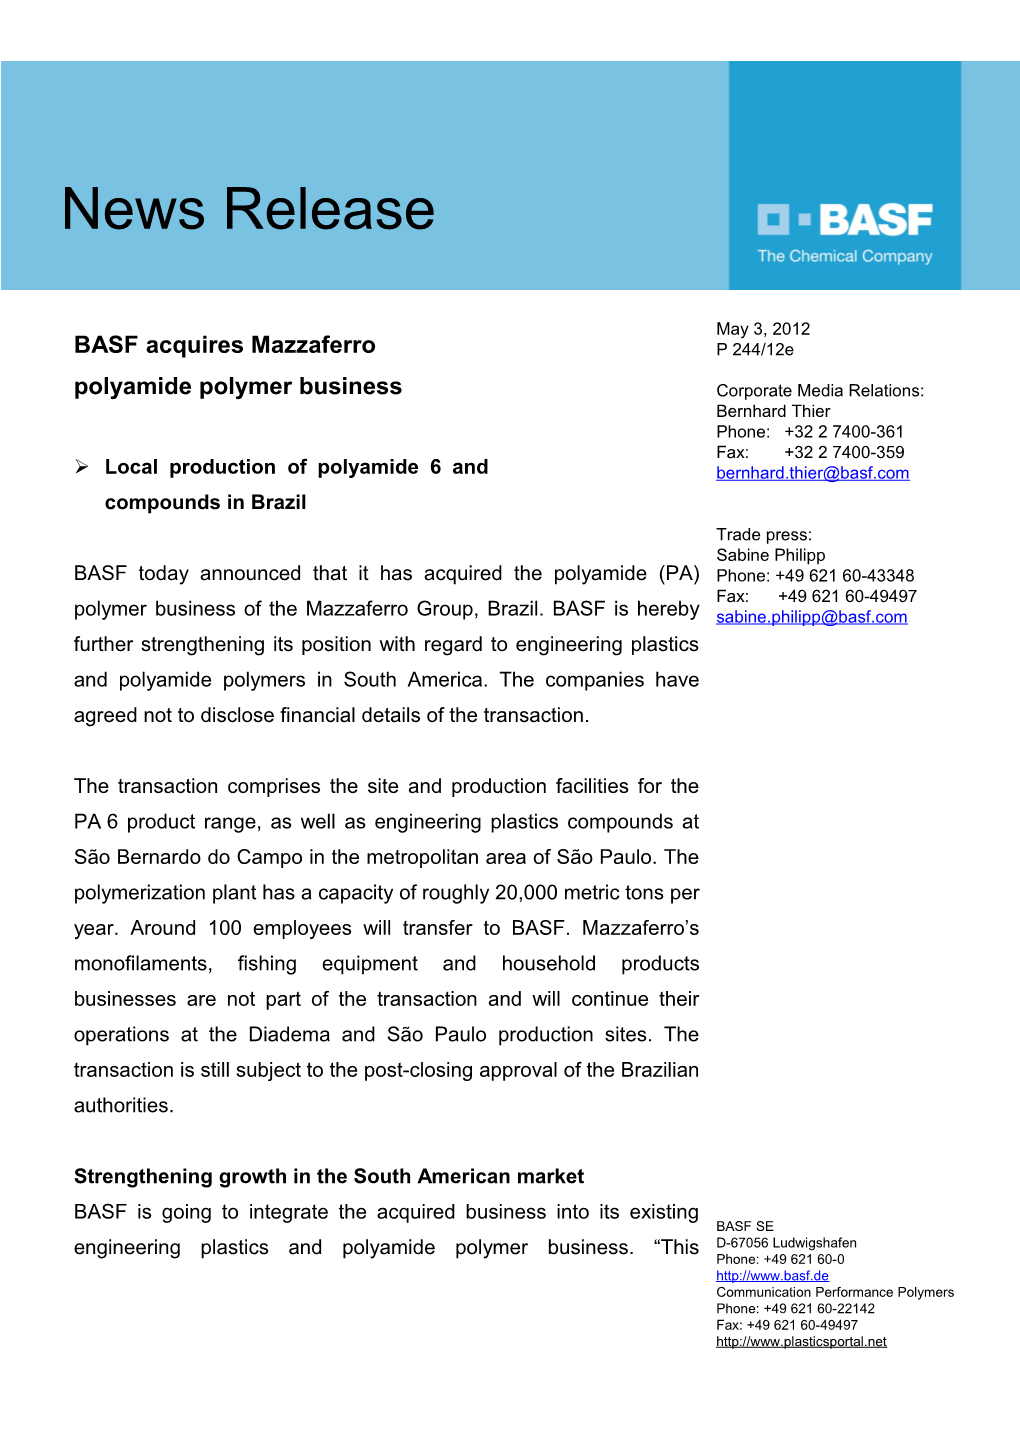 BASF Acquires Mazzaferro Polyamide Polymer Business